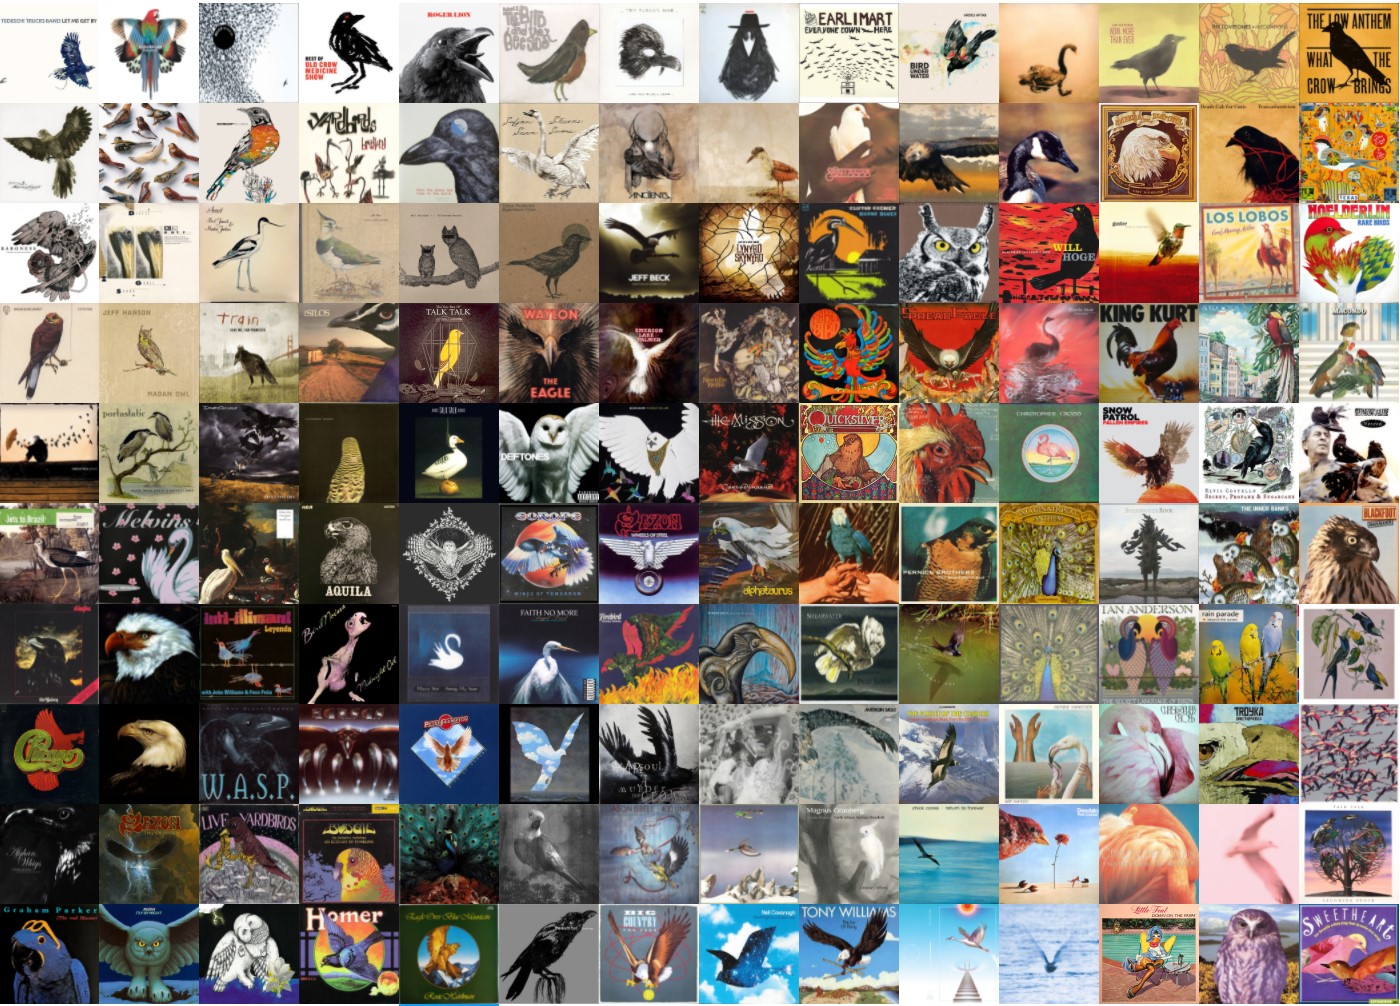 TravelMarx: Music album covers with birds on them